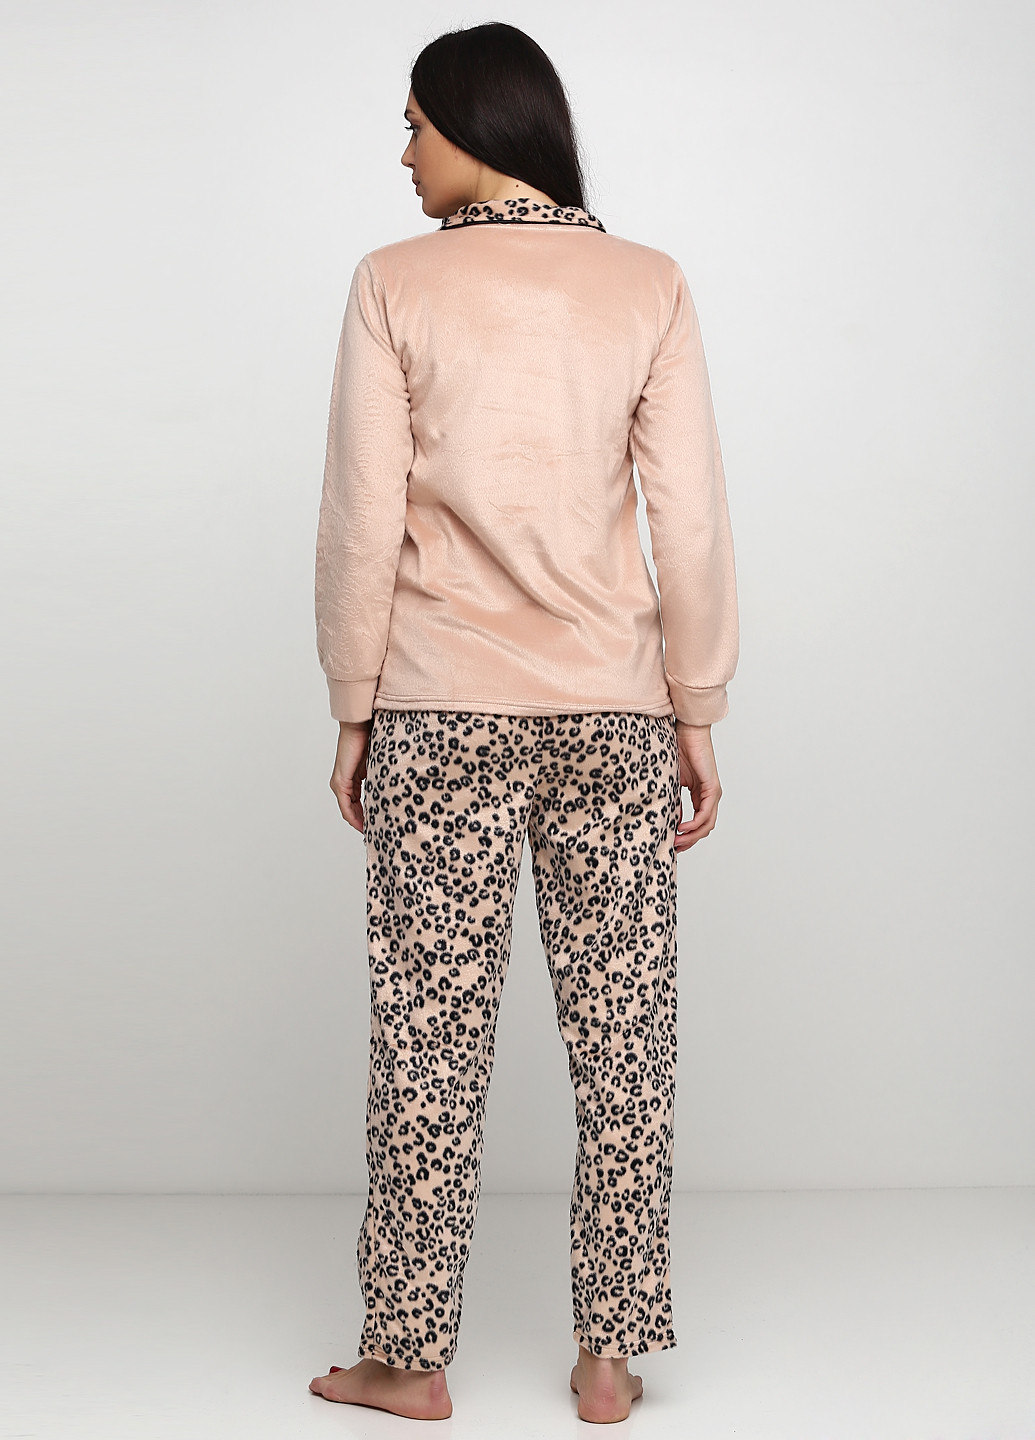 Светло-коричневая всесезон пижама (кофта, брюки) кофта + брюки Pijamoni